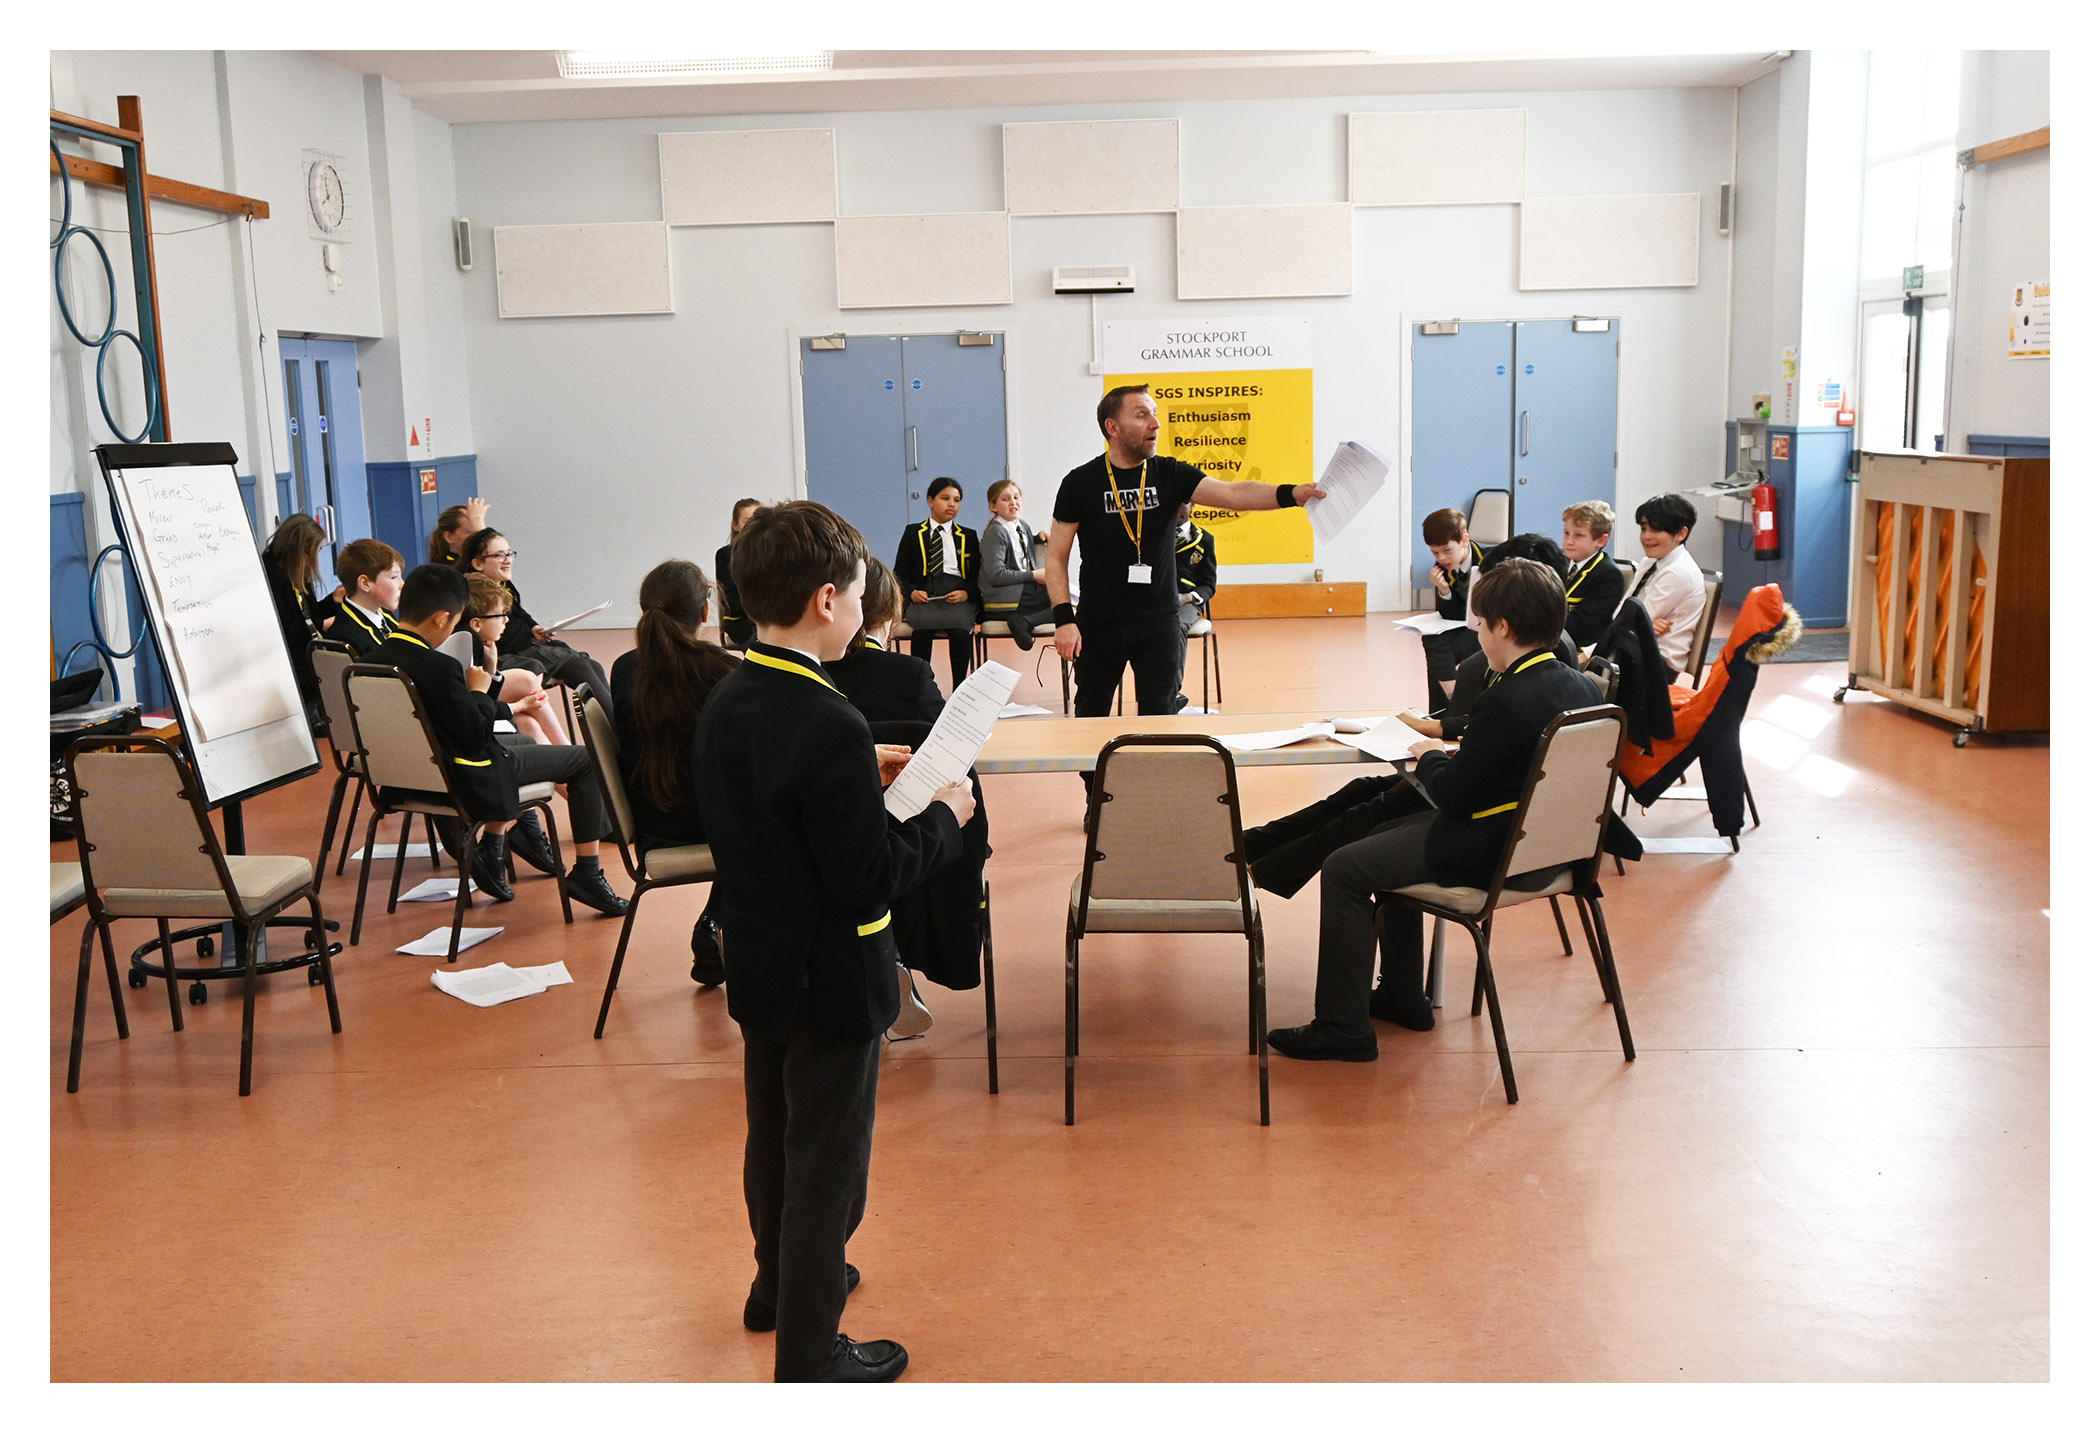 Year 6 pupils taking part in a Macbeth workshop